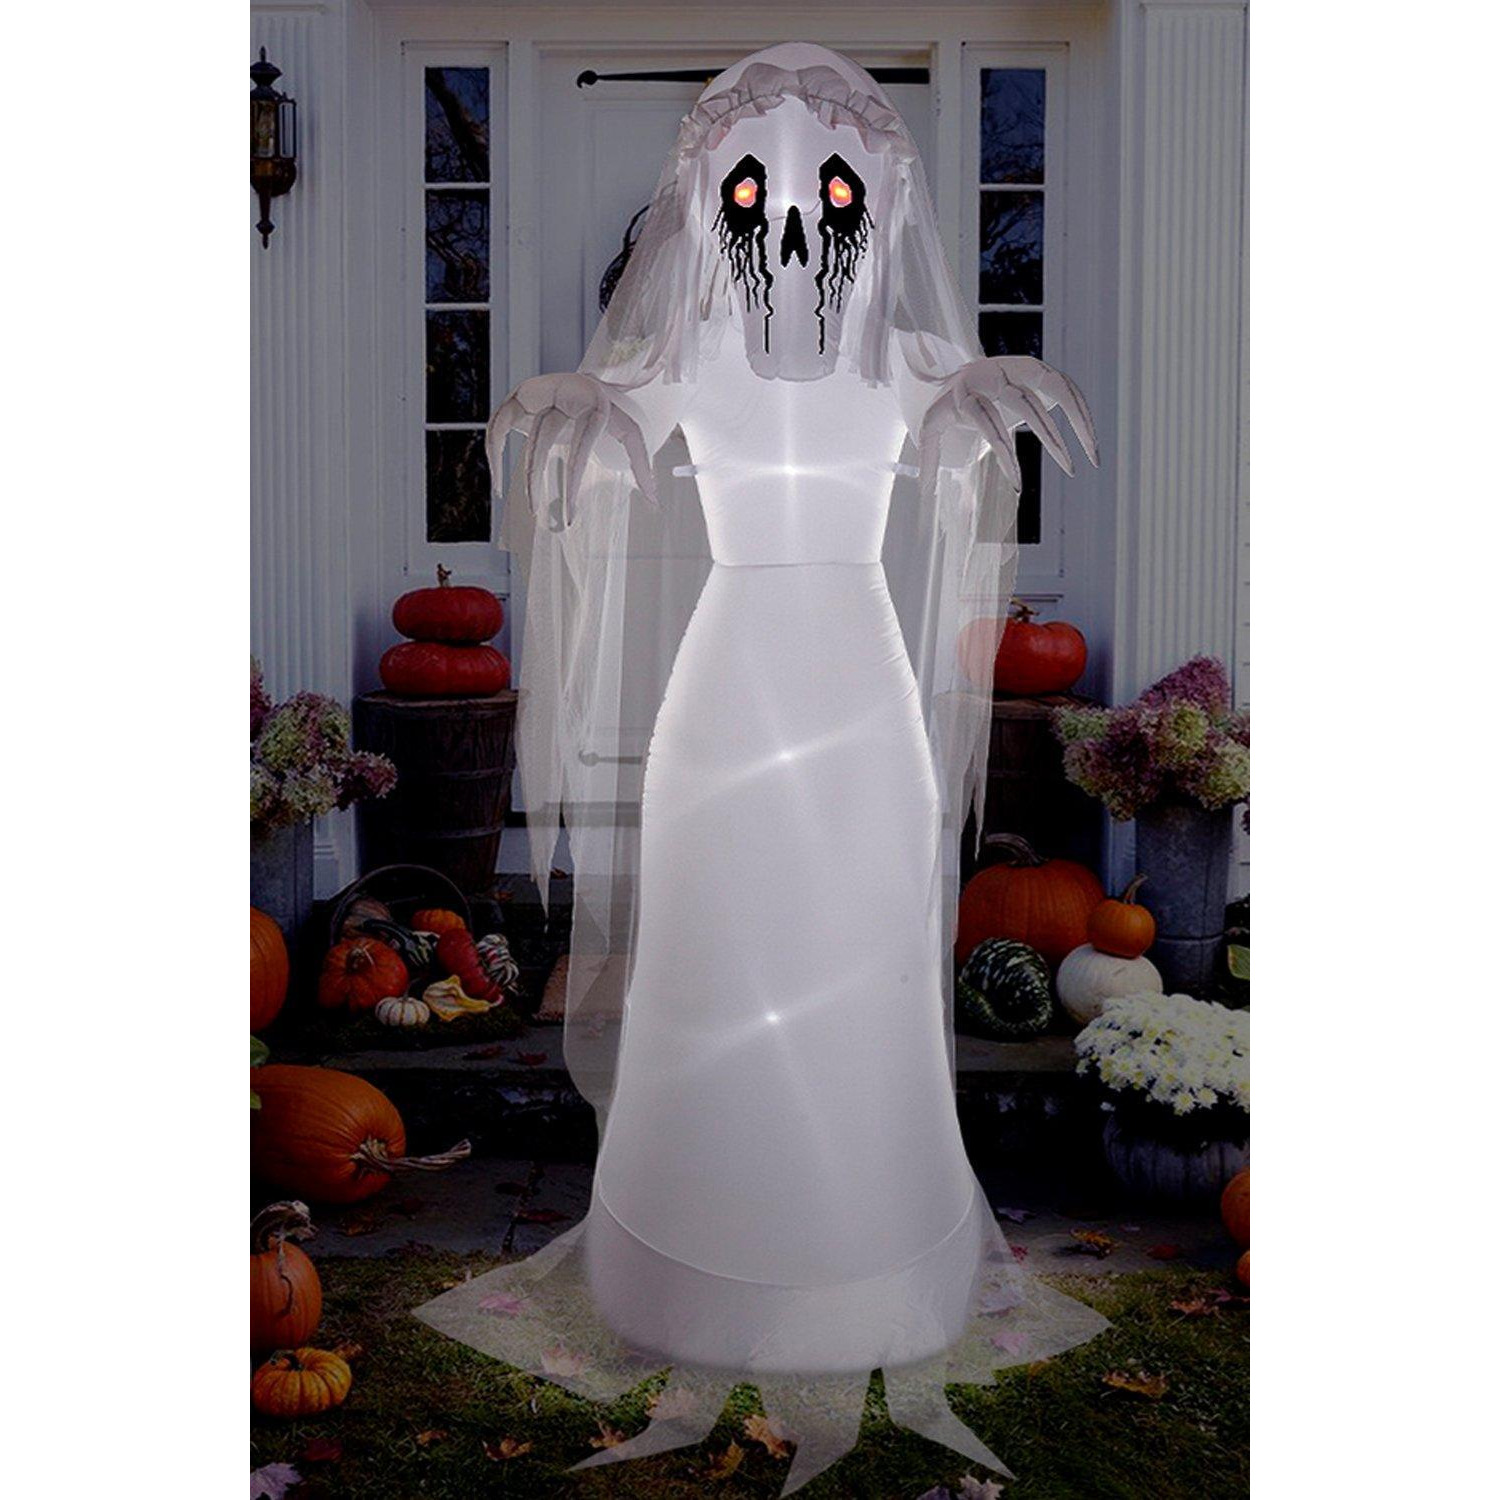 270cm Halloween Inflatable Ghost Bride - image 1